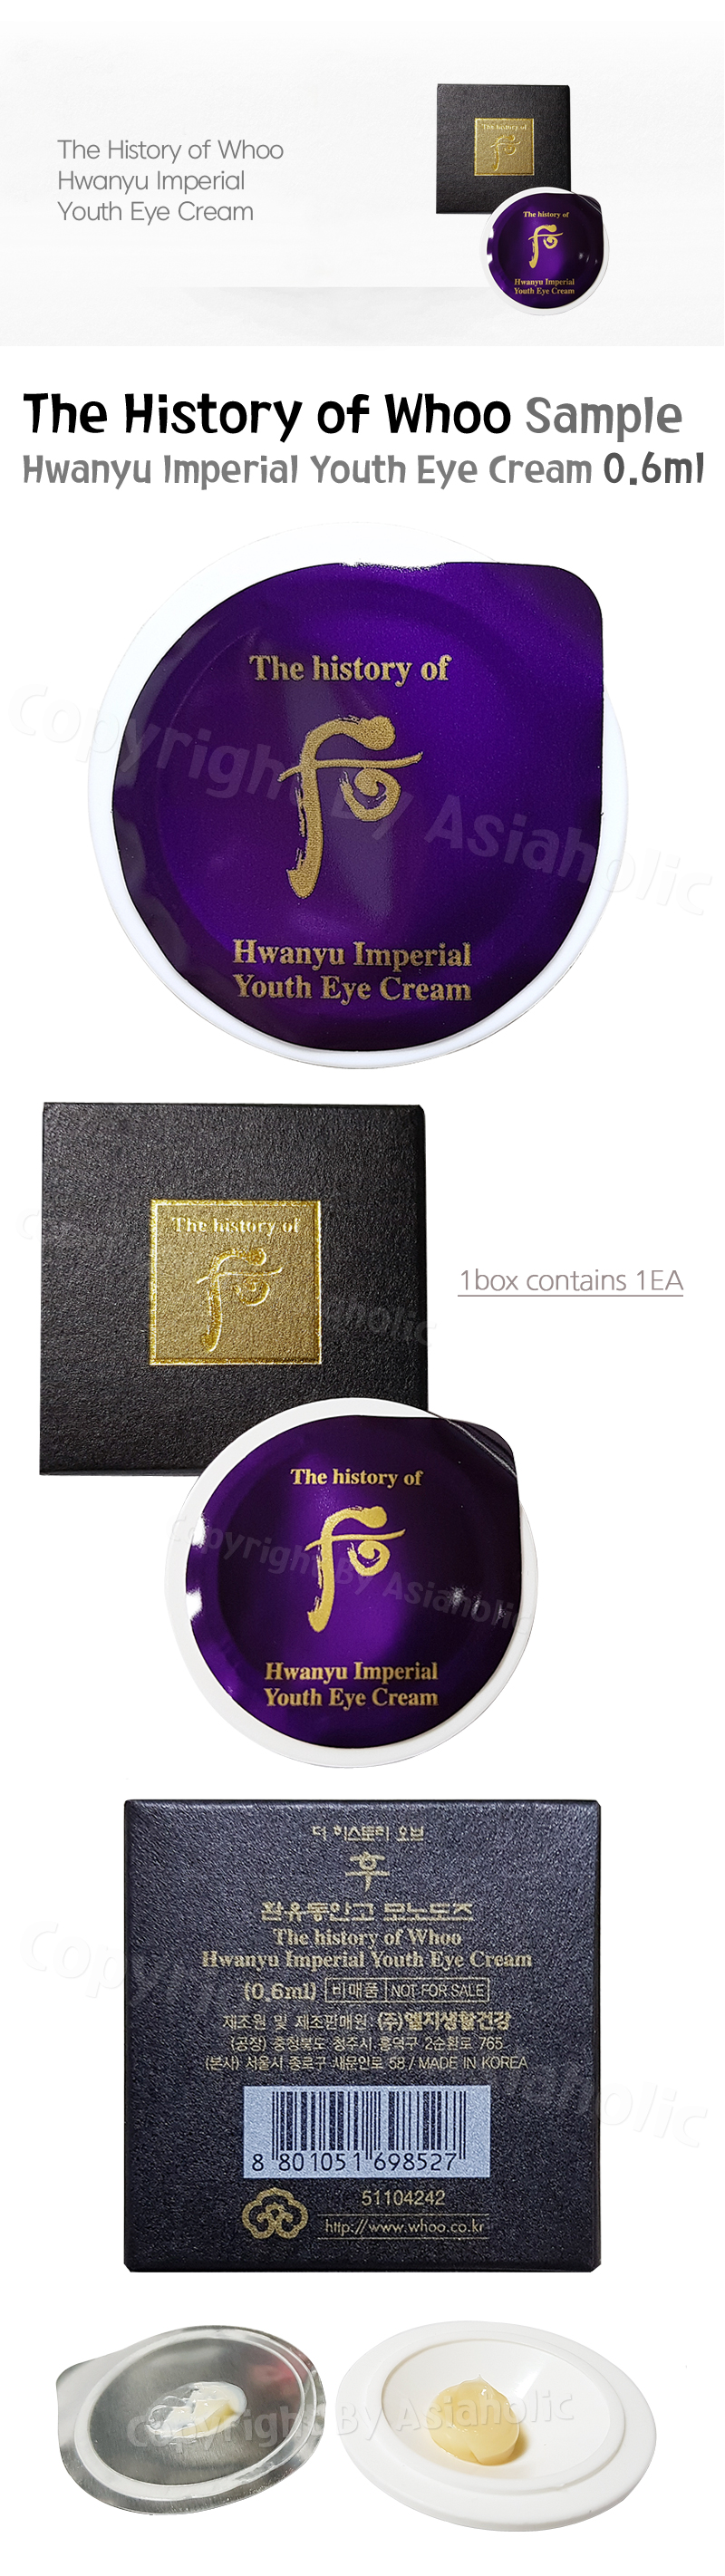 The history of Whoo Hwanyu Imperial Youth Eye Cream 0.6ml x 5pcs (5Box) Premium Sample Newist Version